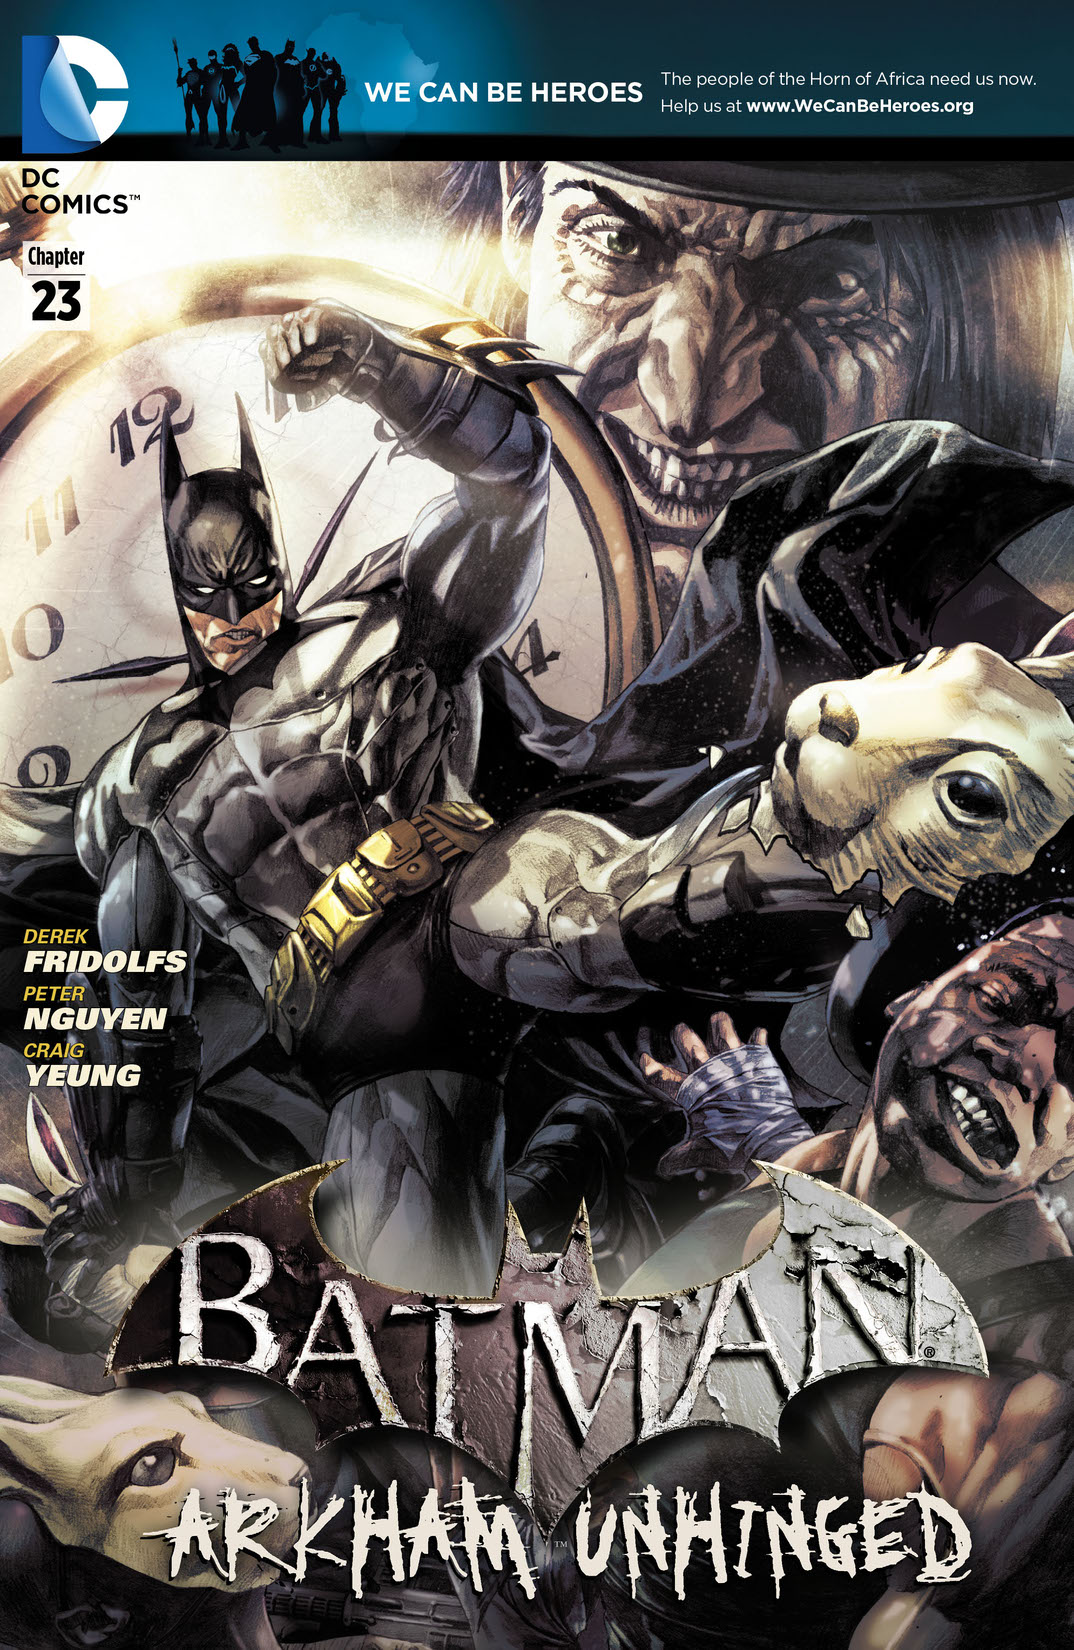 Batman: Arkham Unhinged #23 preview images